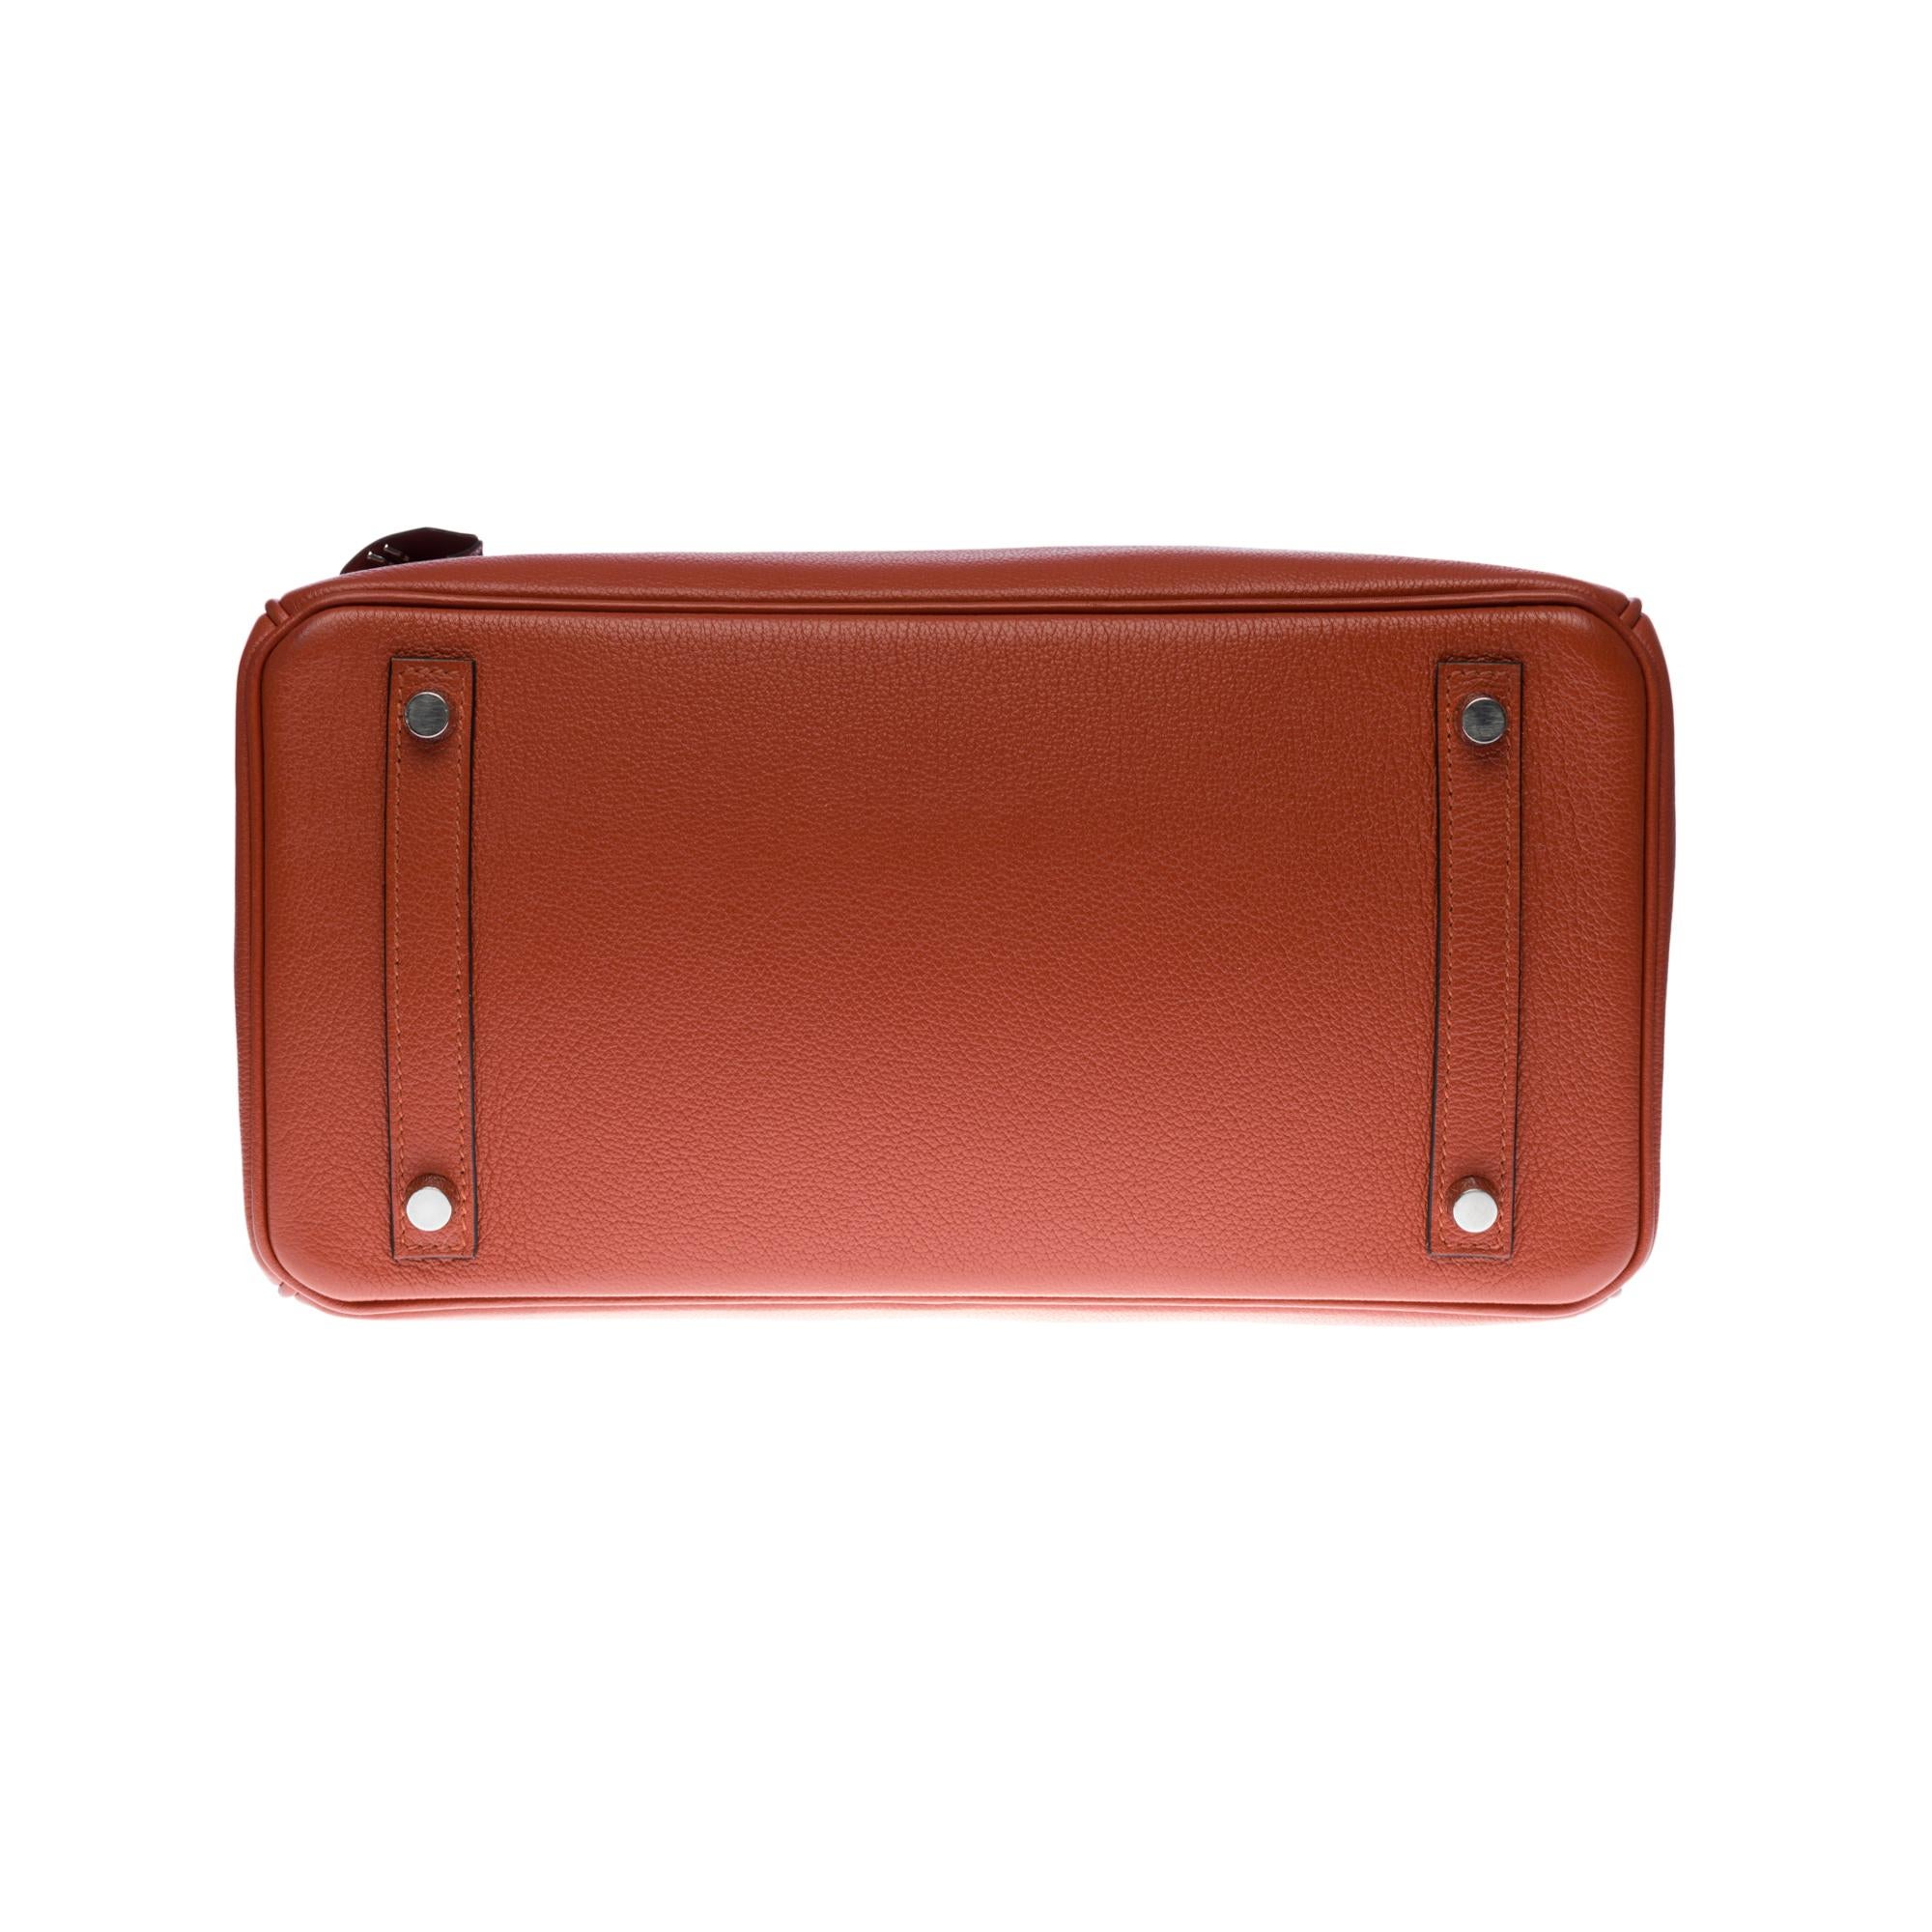 Stunning Hermès Birkin 30 handbag in Cuivre/Copper Mysore Goat leather, SHW 1